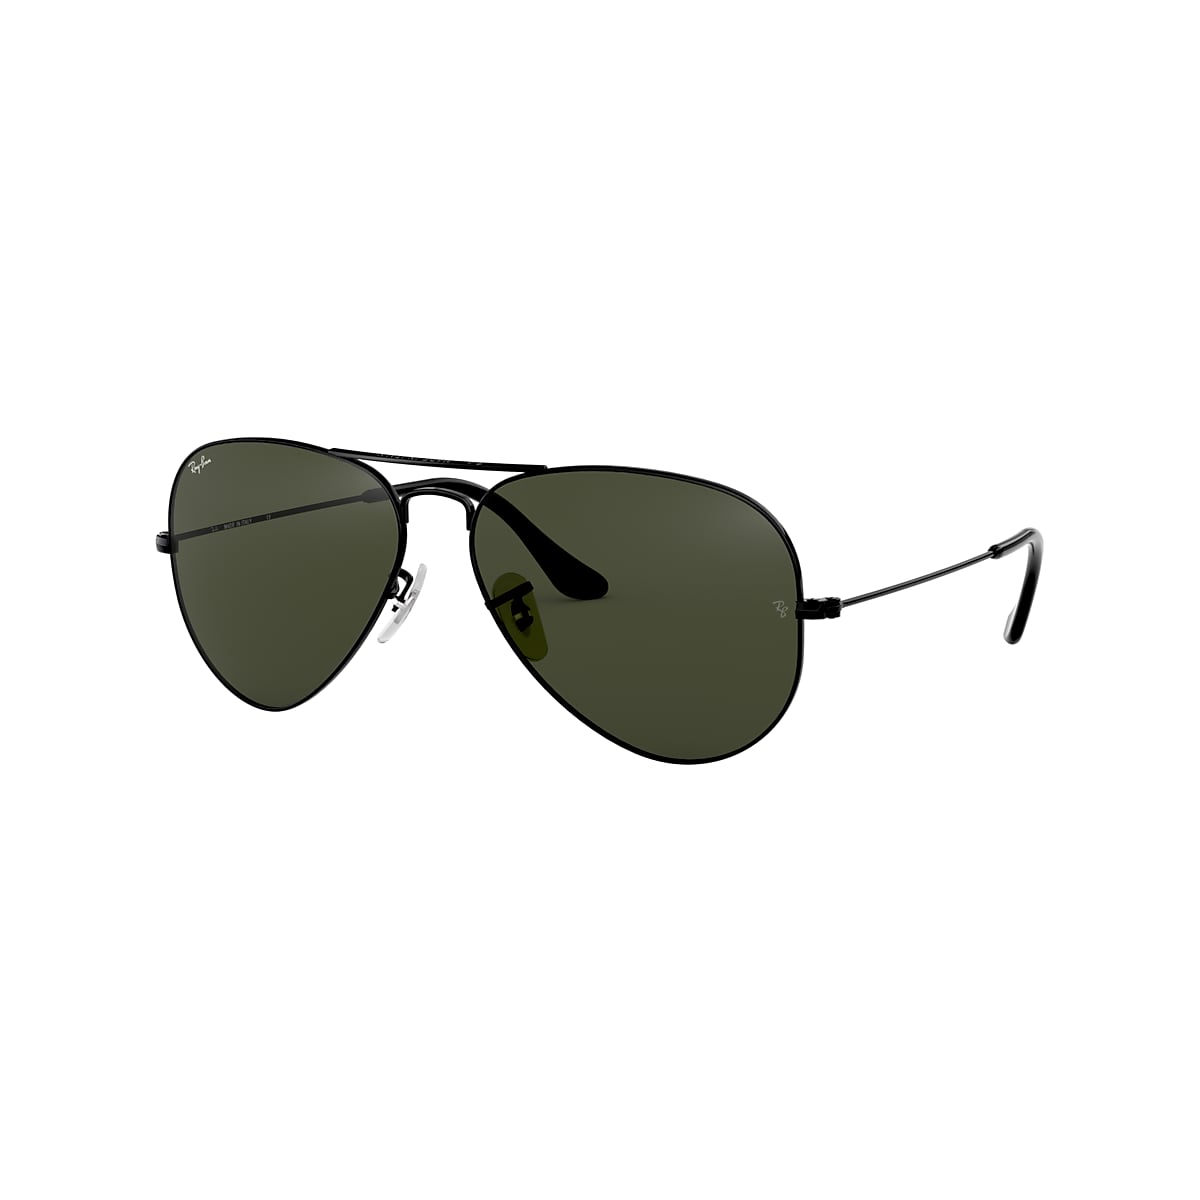 Ray-Ban RB3025 Aviator Classic 58 Green Classic G-15 & Sunglasses Sunglass Hut USA